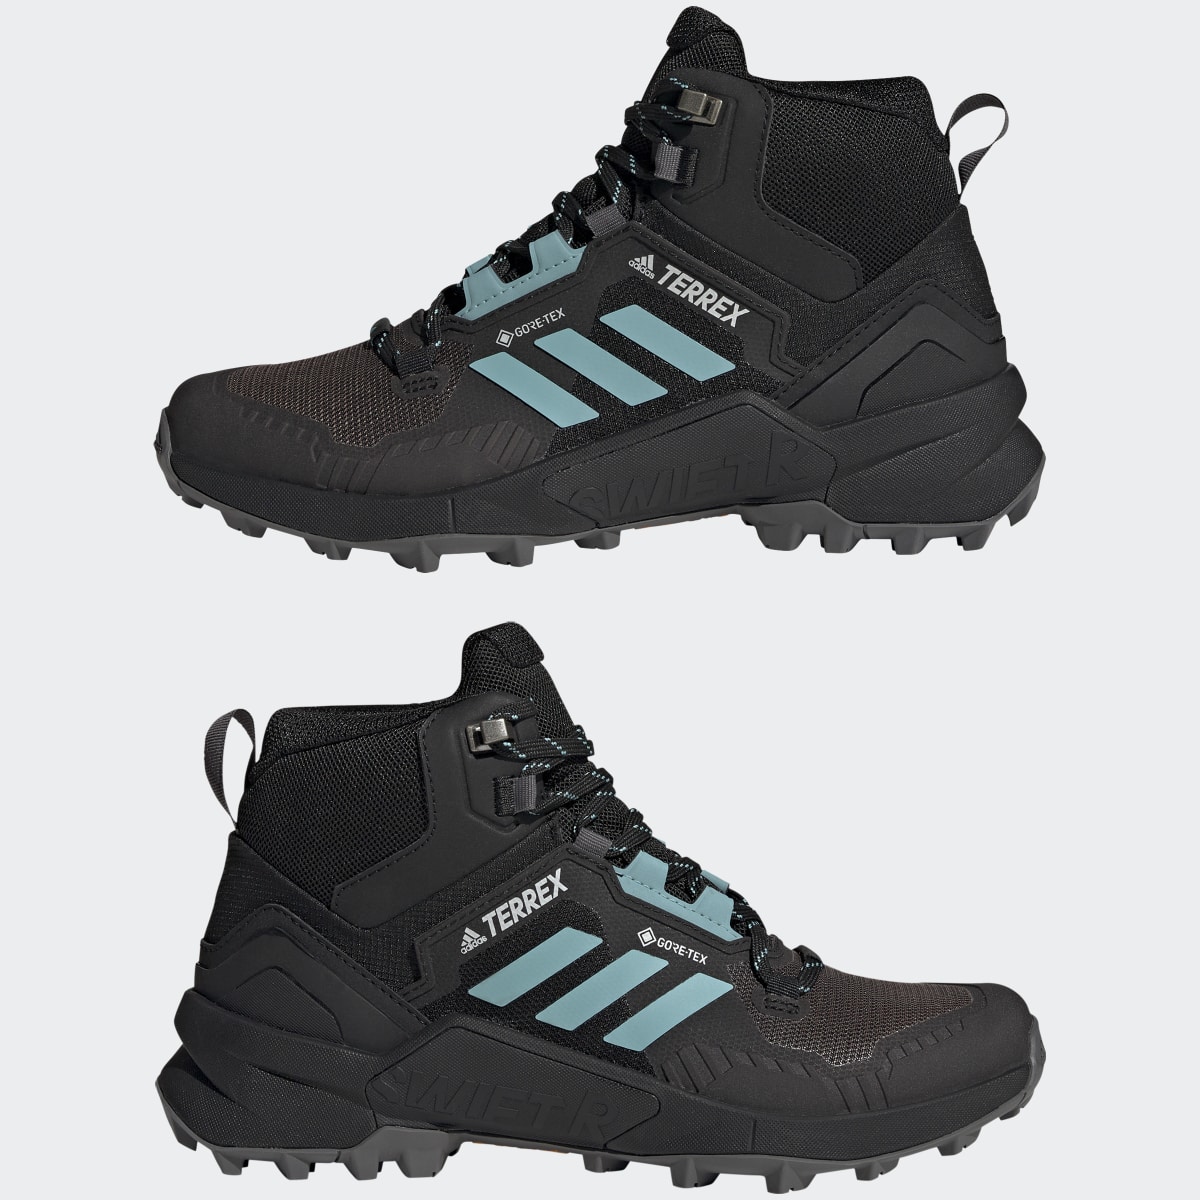 Adidas Terrex Swift R3 Mid GORE-TEX Hiking Shoes. 11